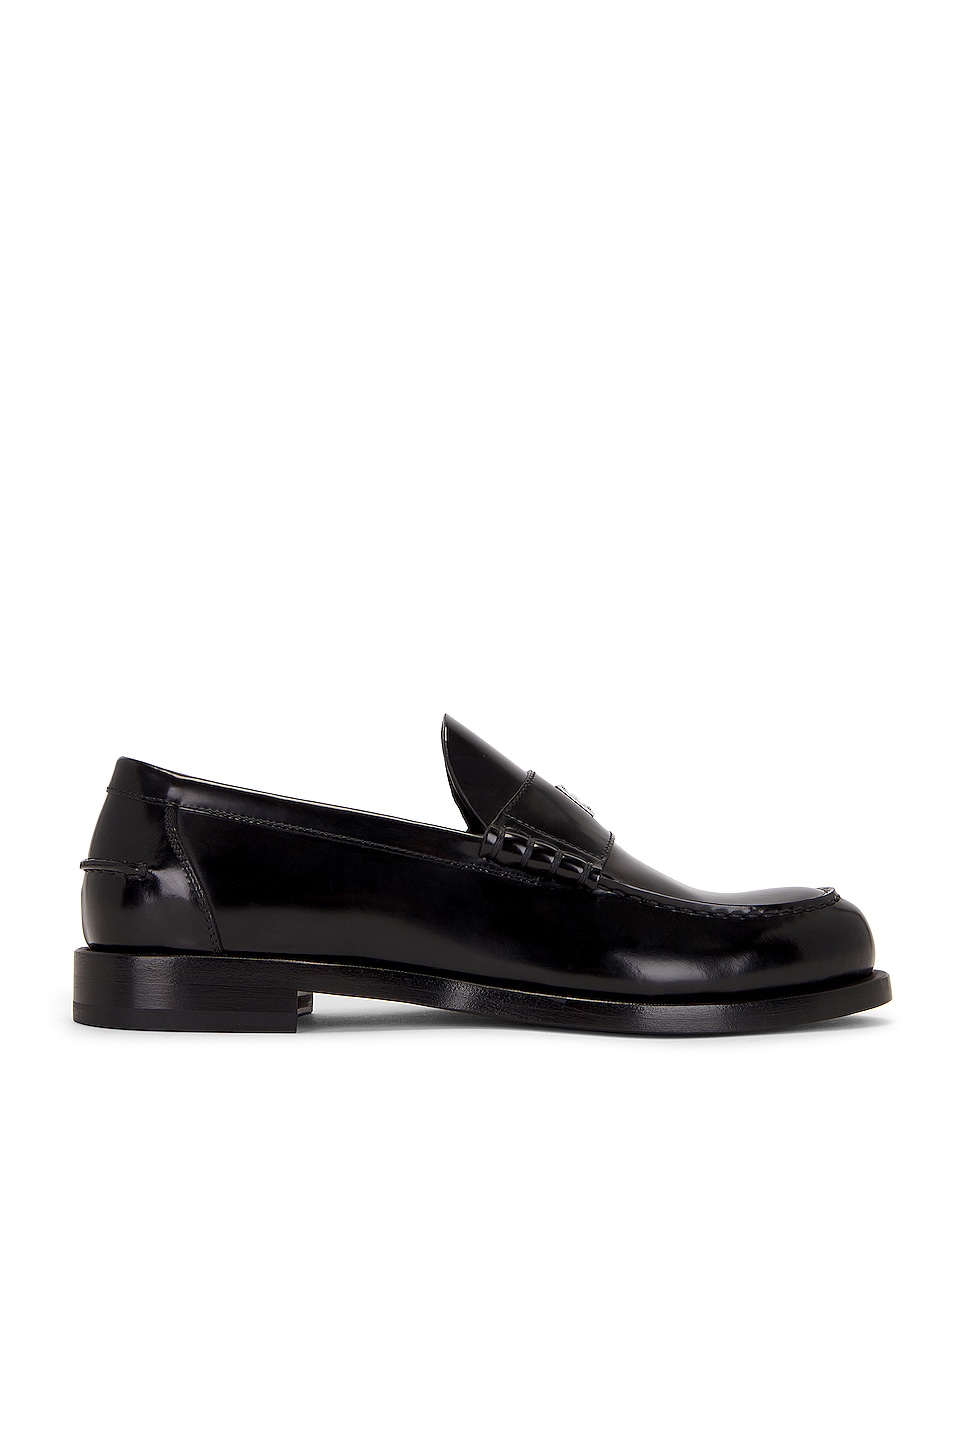 Image 1 of Givenchy Mr G Loafer in Black